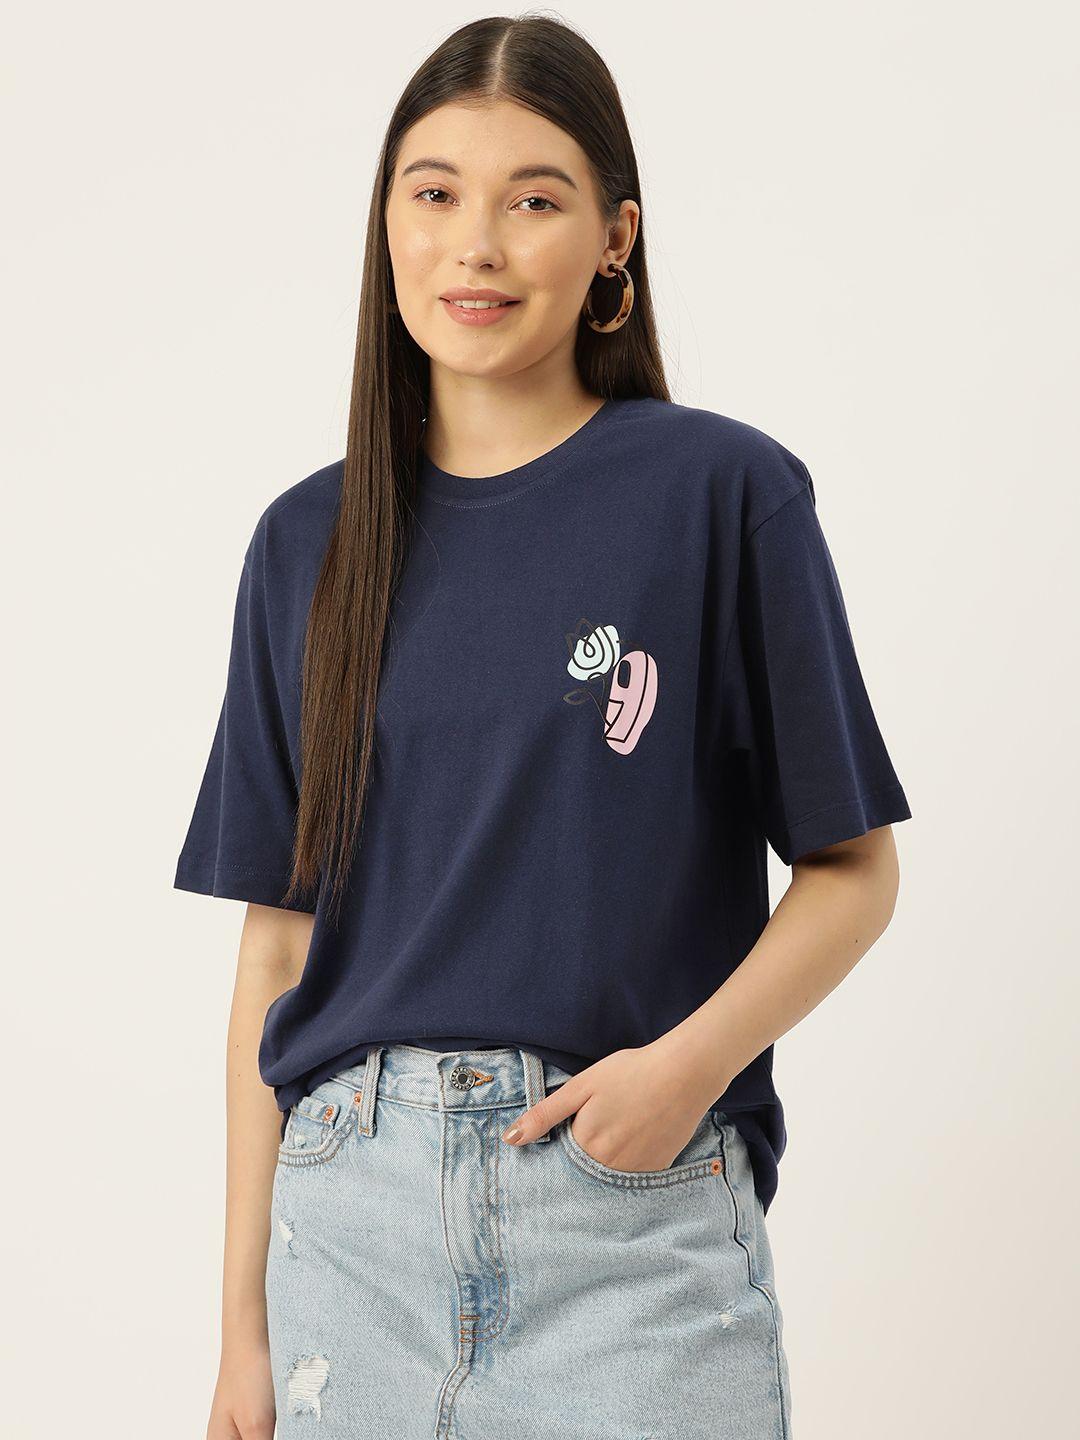 slenor women printed t-shirt